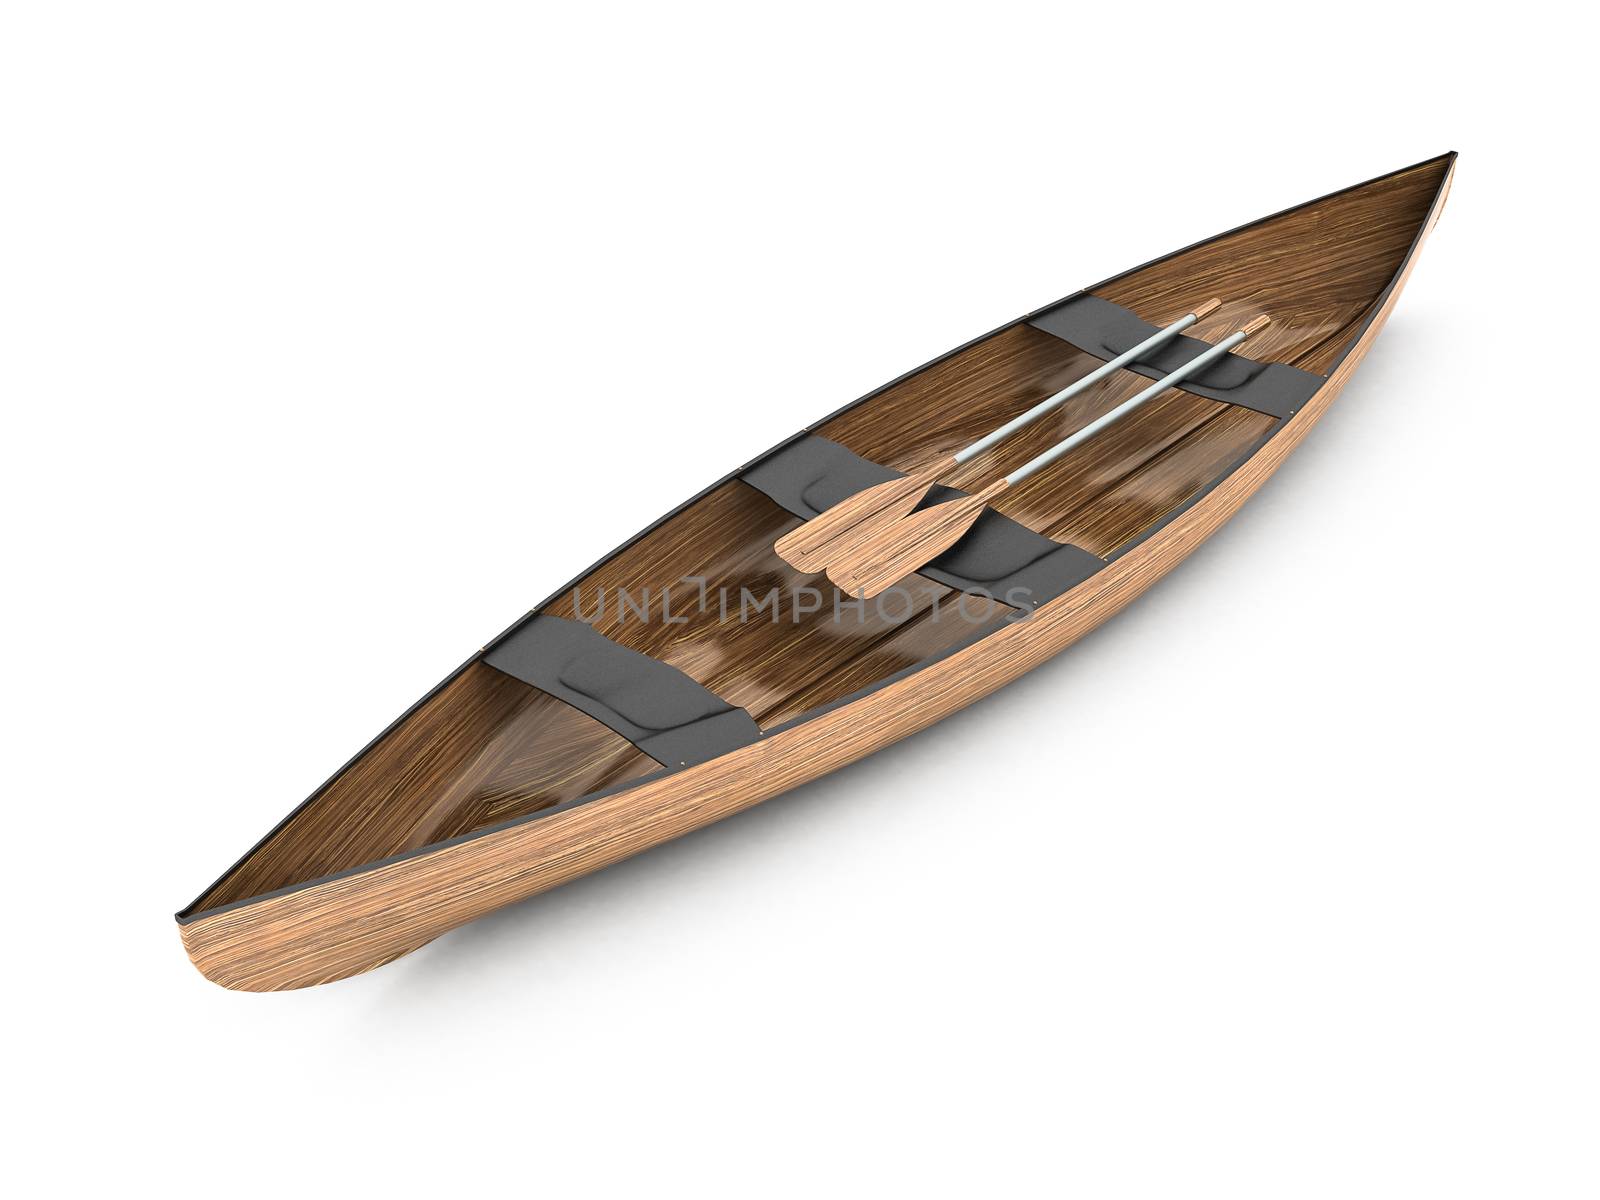 Wooden boat canoe by mrgarry